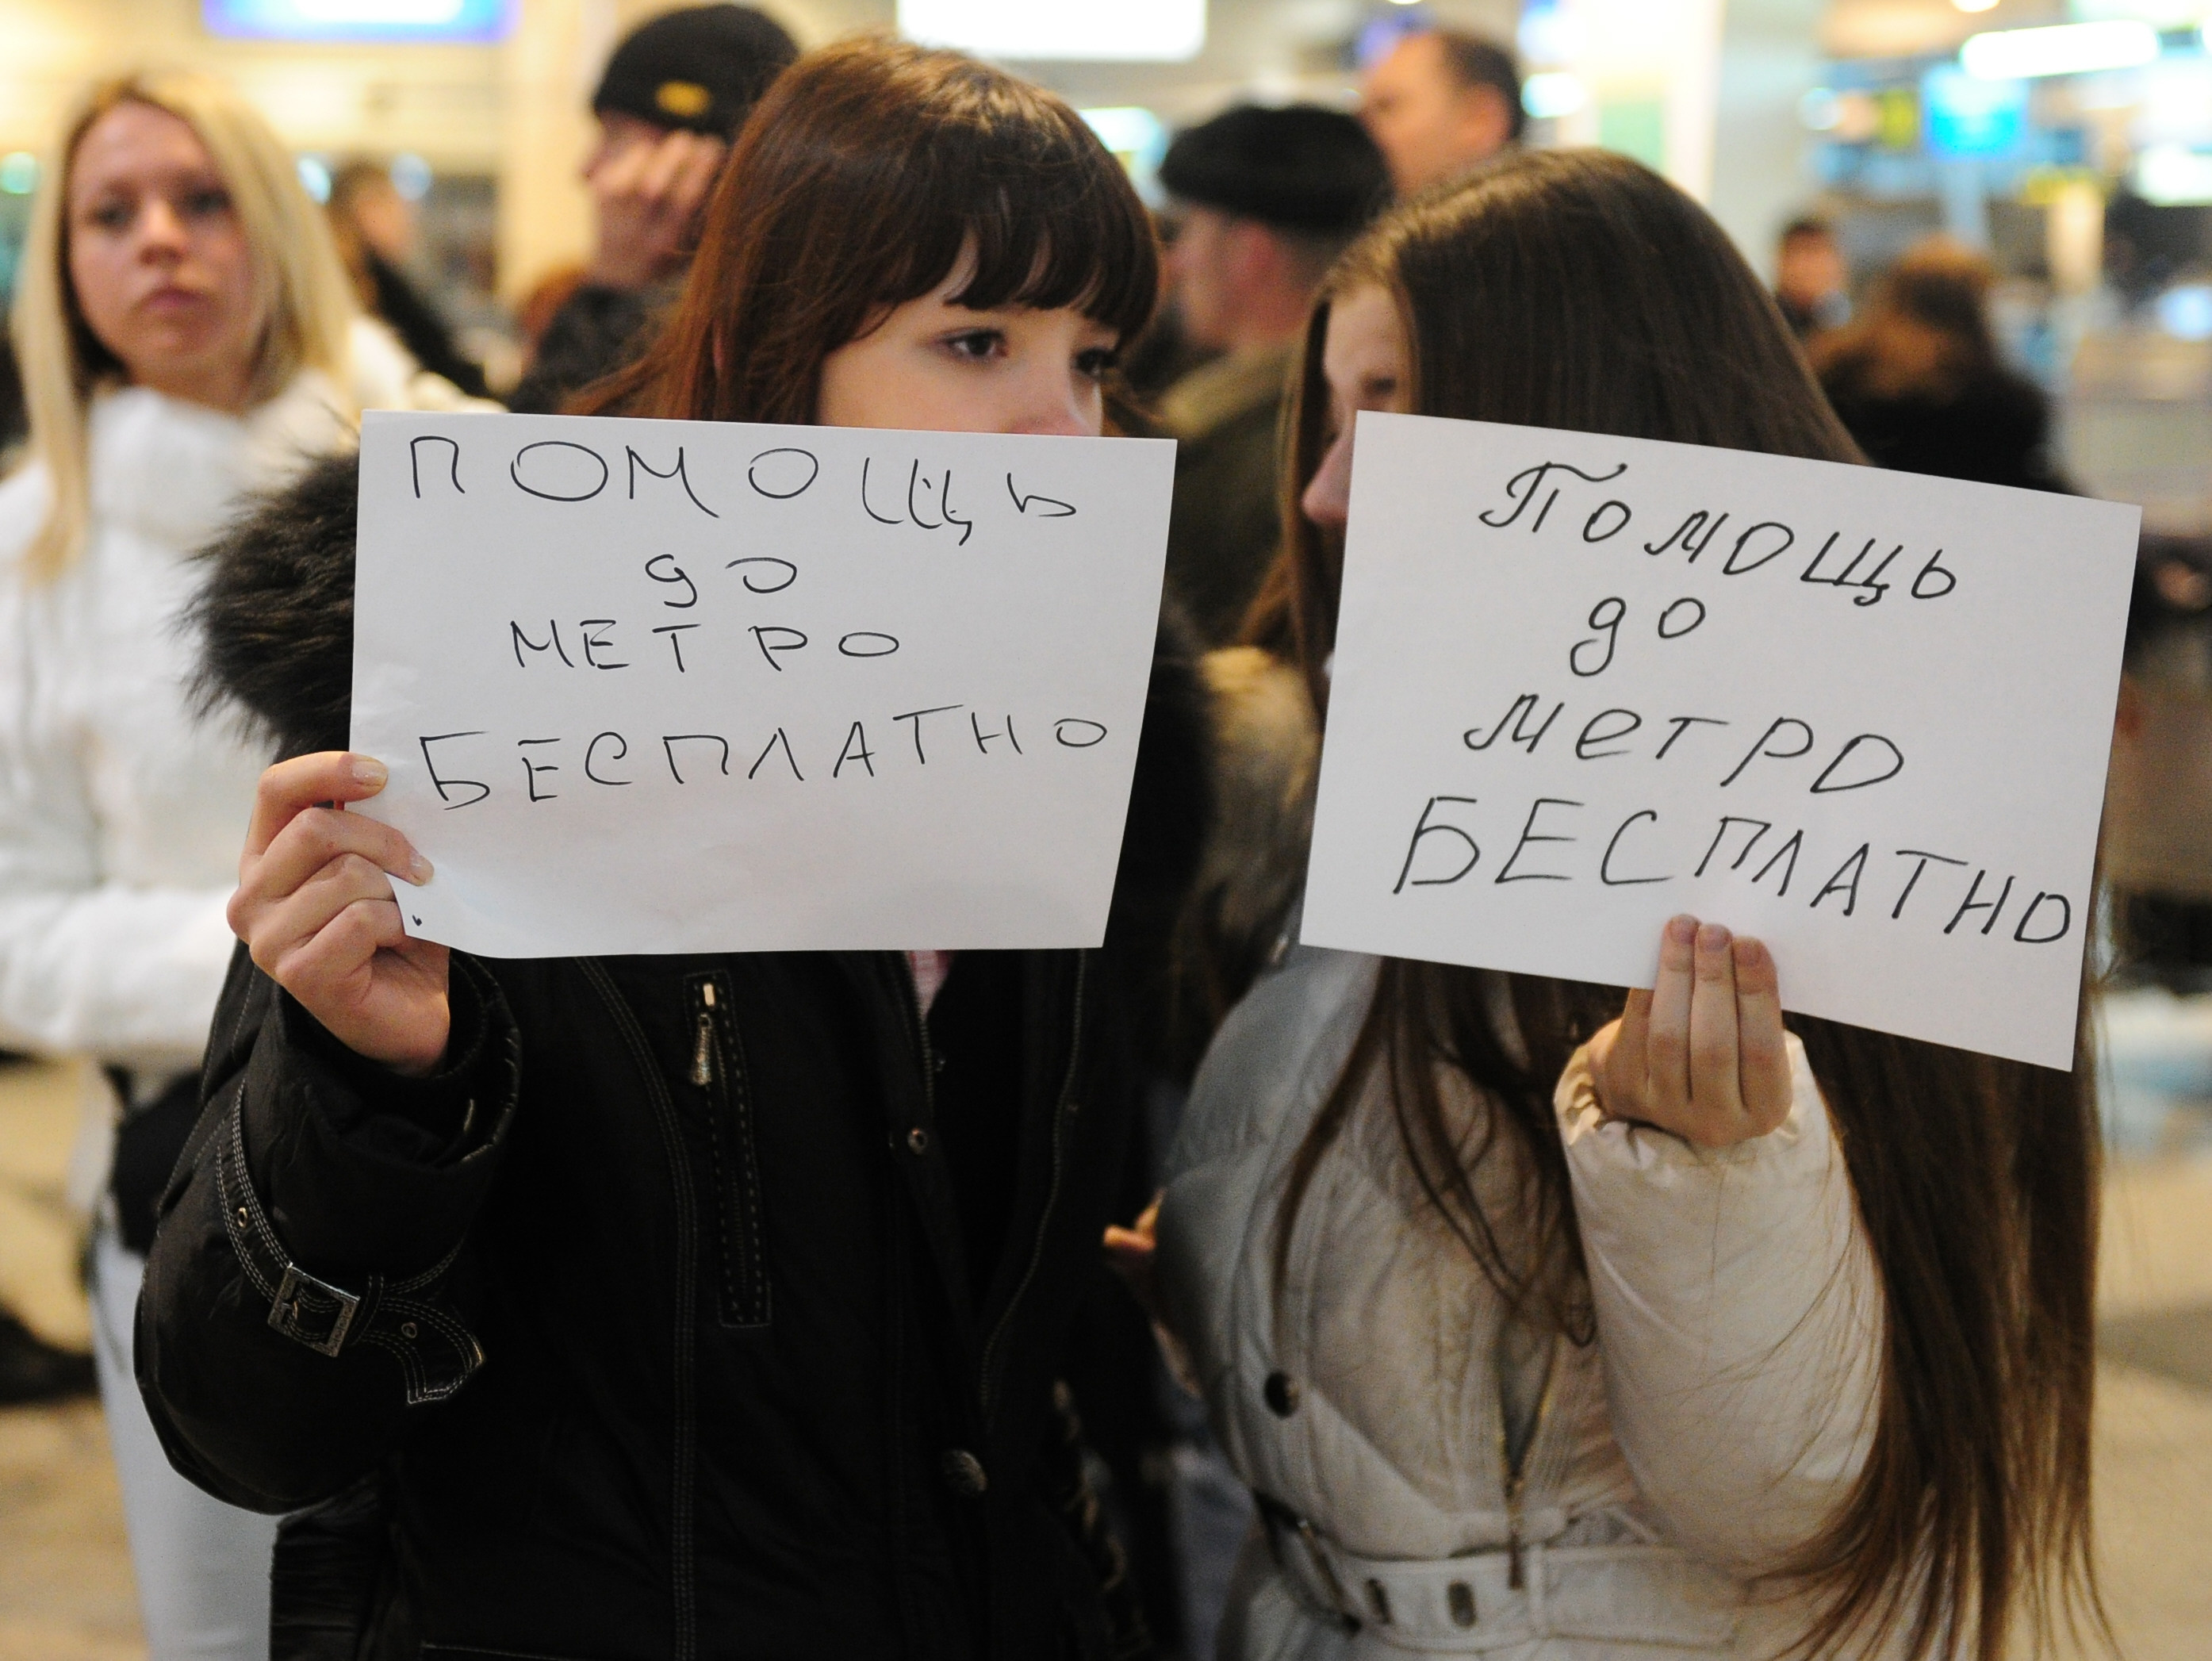 Москвичи в аэропорту Домодедово предлагали бесплатно довезти желающих до метро